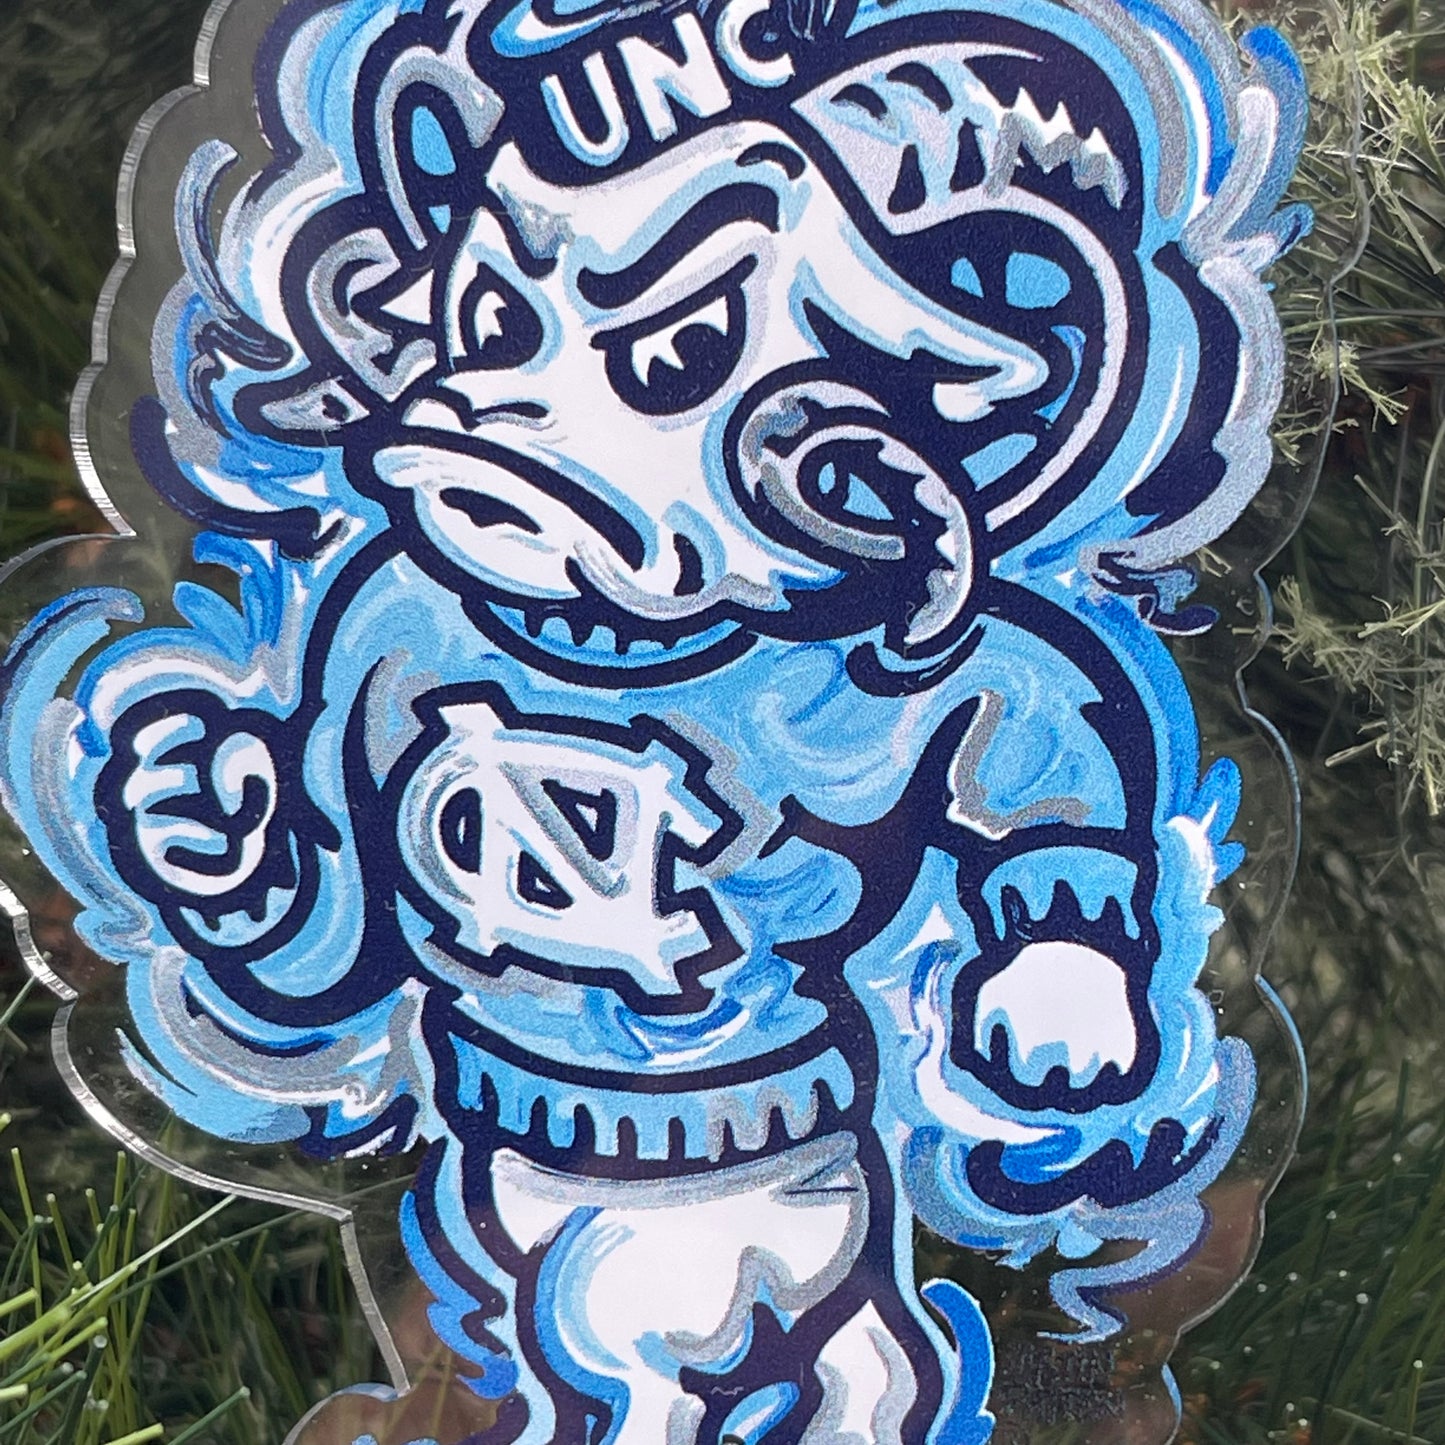 University of North Carolina Mascot Ornament by Justin Patten